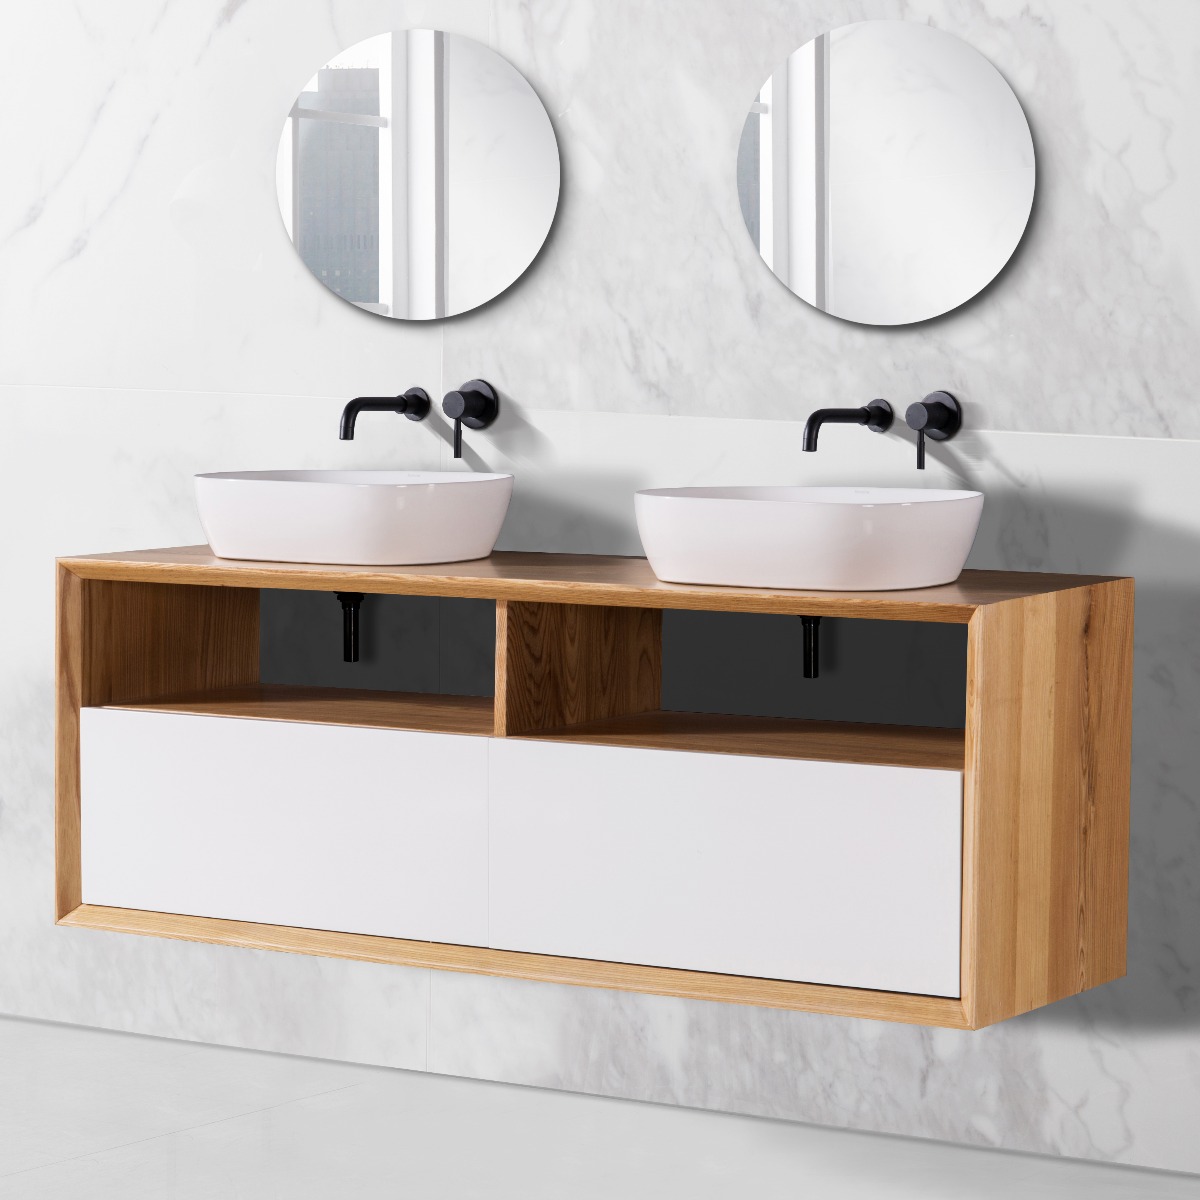 paloma-vanity-vanities-timber-solid-wallmounted-floating-hardwood-wood-wooden-modern-best-bathroom-stylish-ash-oak-jacobean-isometric